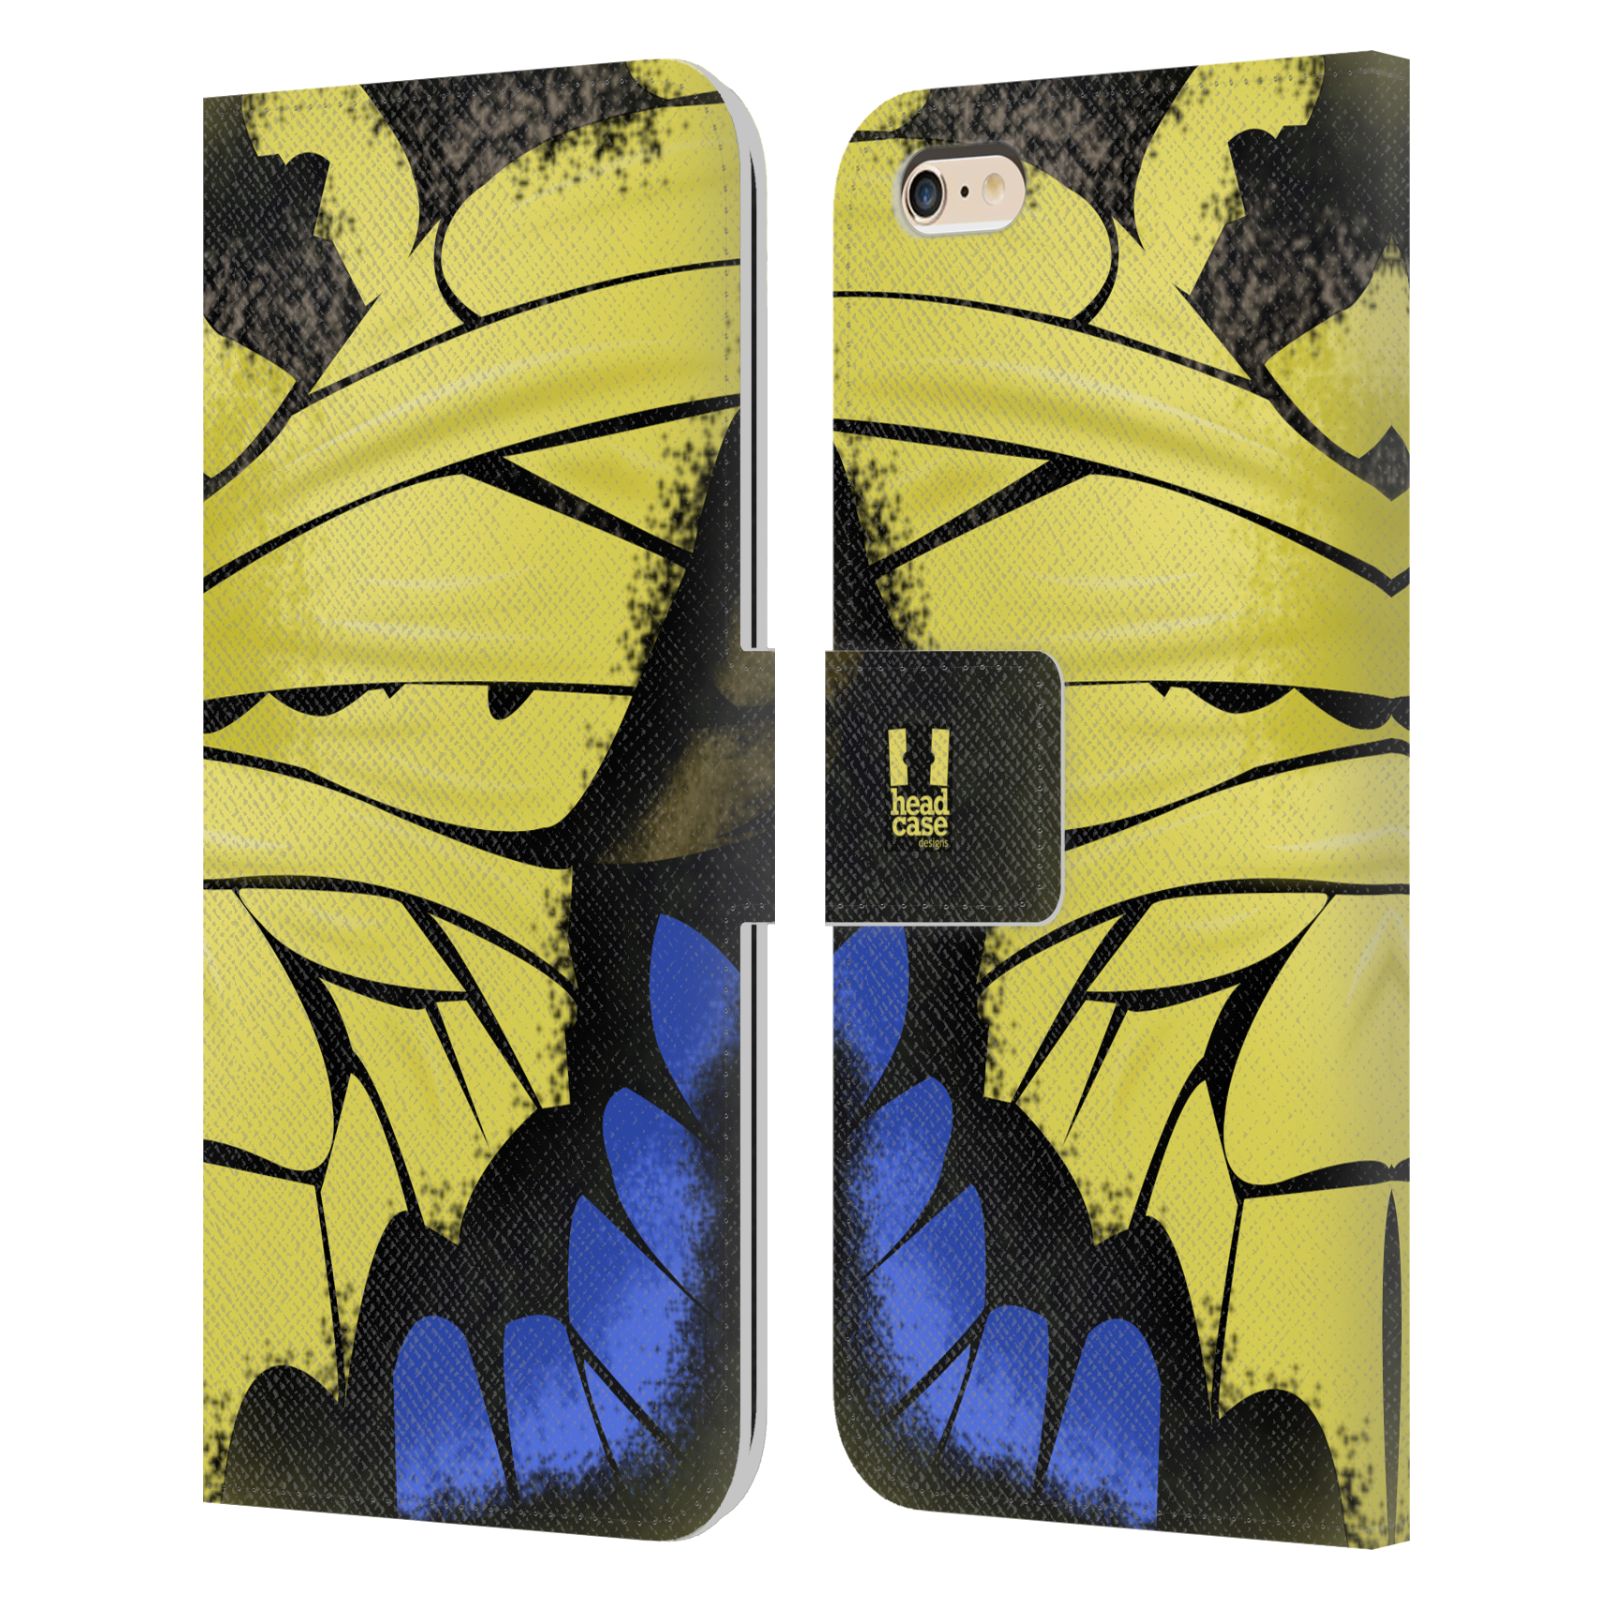 HEAD CASE Flipové pouzdro pro mobil Apple Iphone 6 PLUS / 6S PLUS motýl a křídla kreslený vzor žlutá a modrá